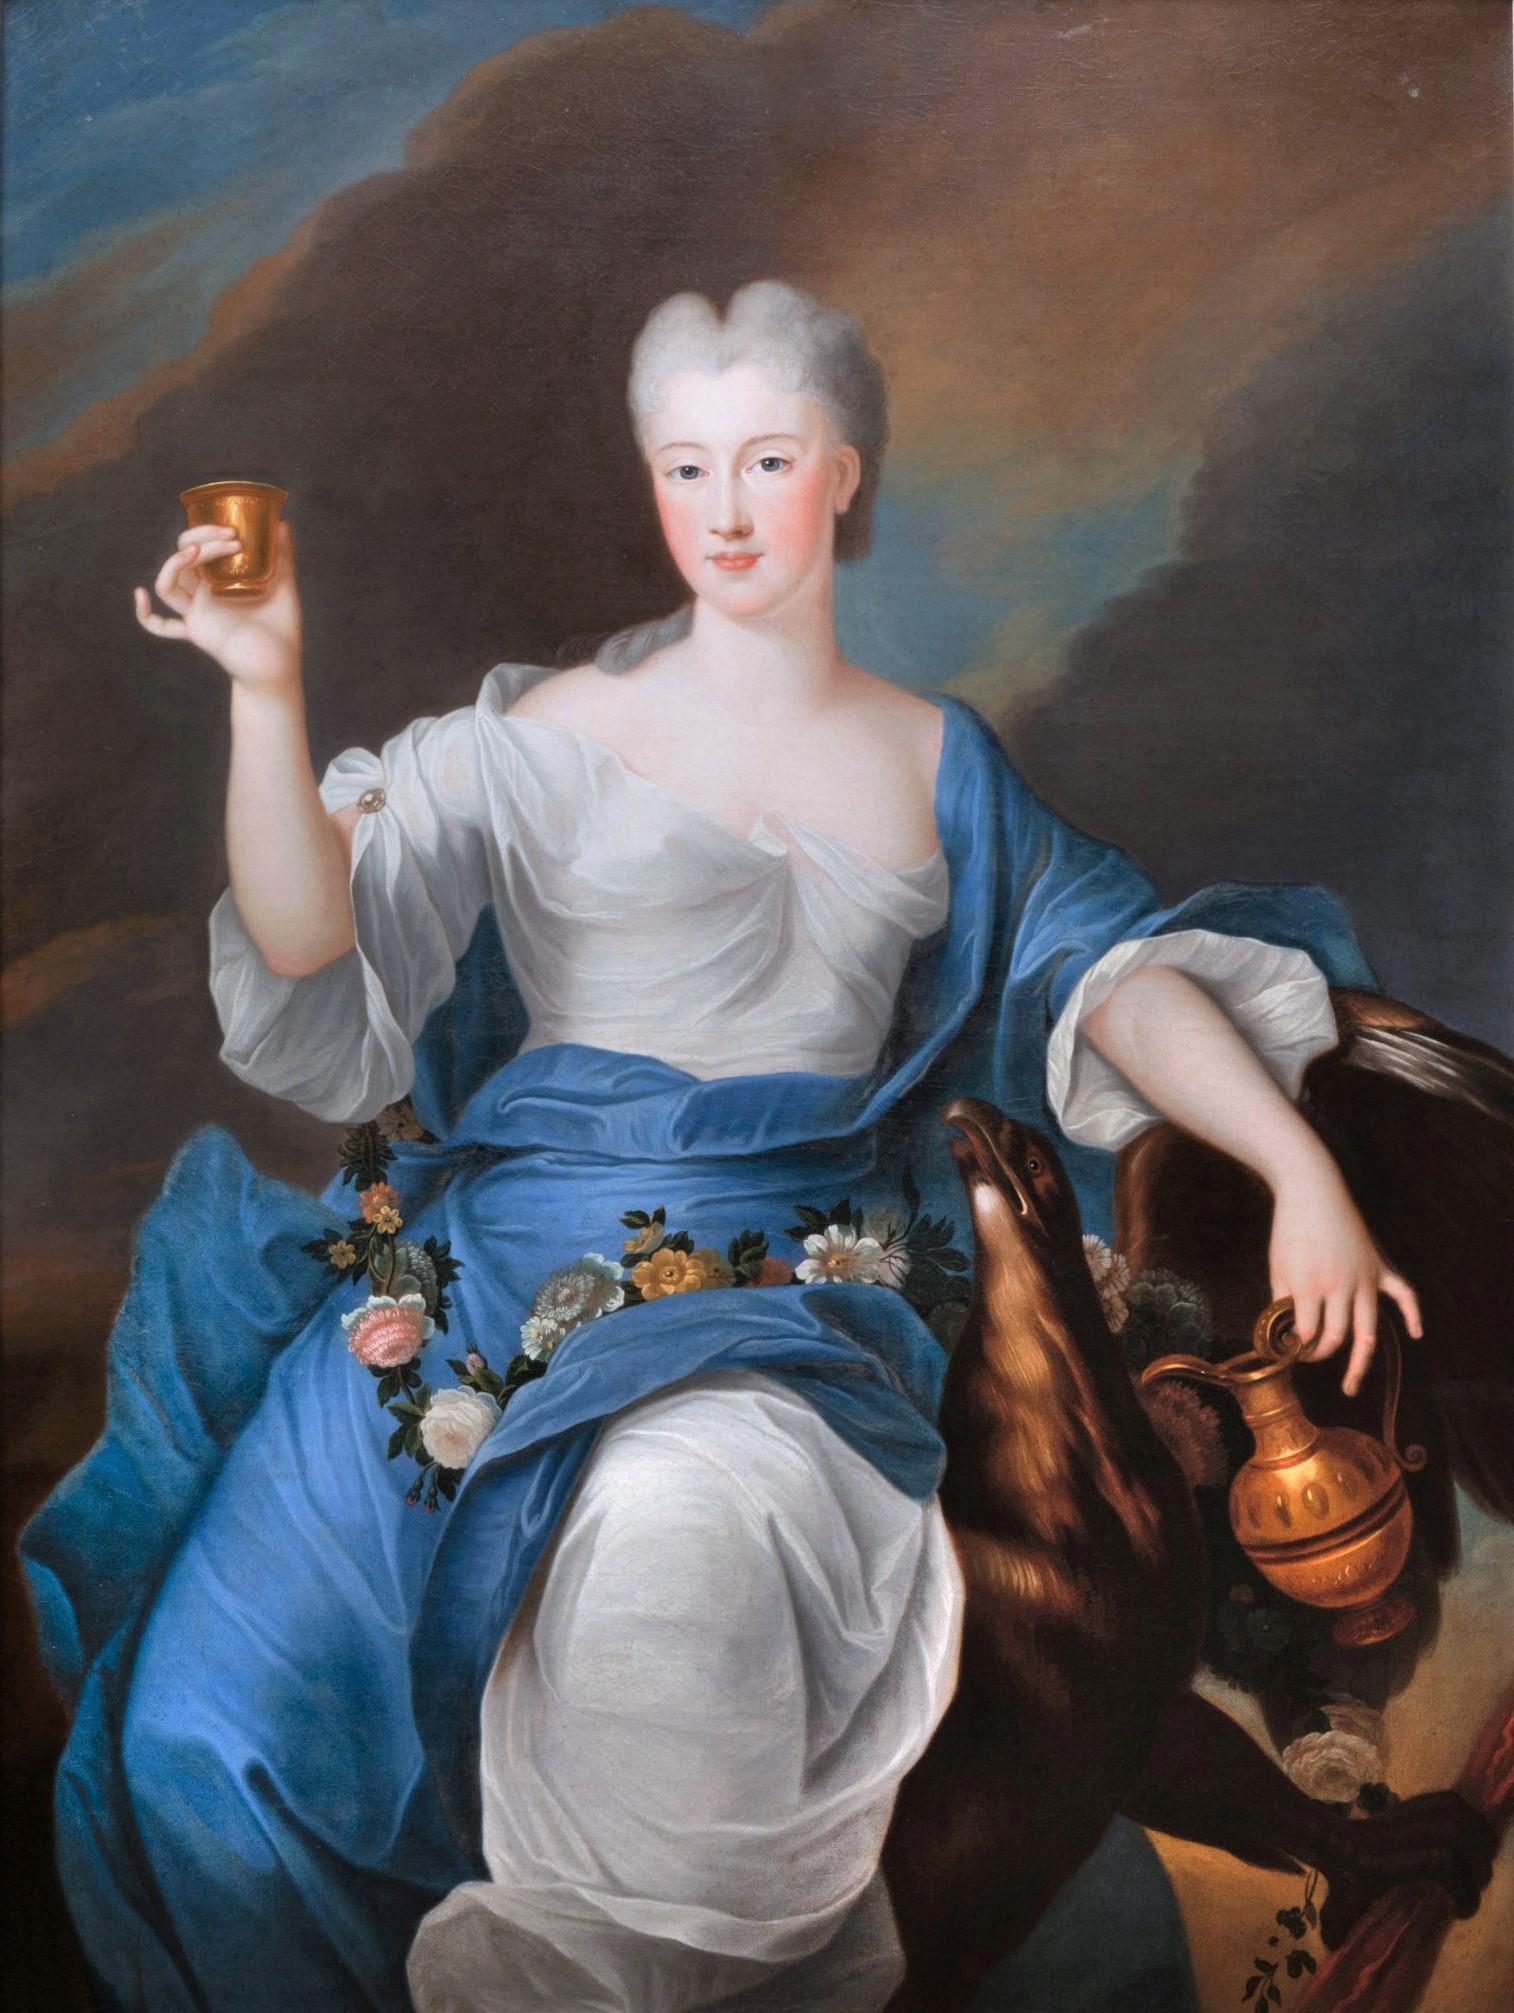 Portrait of Princess of Bourbon as Hebe
Pierre Gobert, circa 1730
Presumed portrait of Elisabeth Thérèse Alexandrine of Bourbon-Condé, Mademoiselle de Sens, depicted as the goddess Hebe kidnapped by Zeus, transformed into an eagle.


18th century